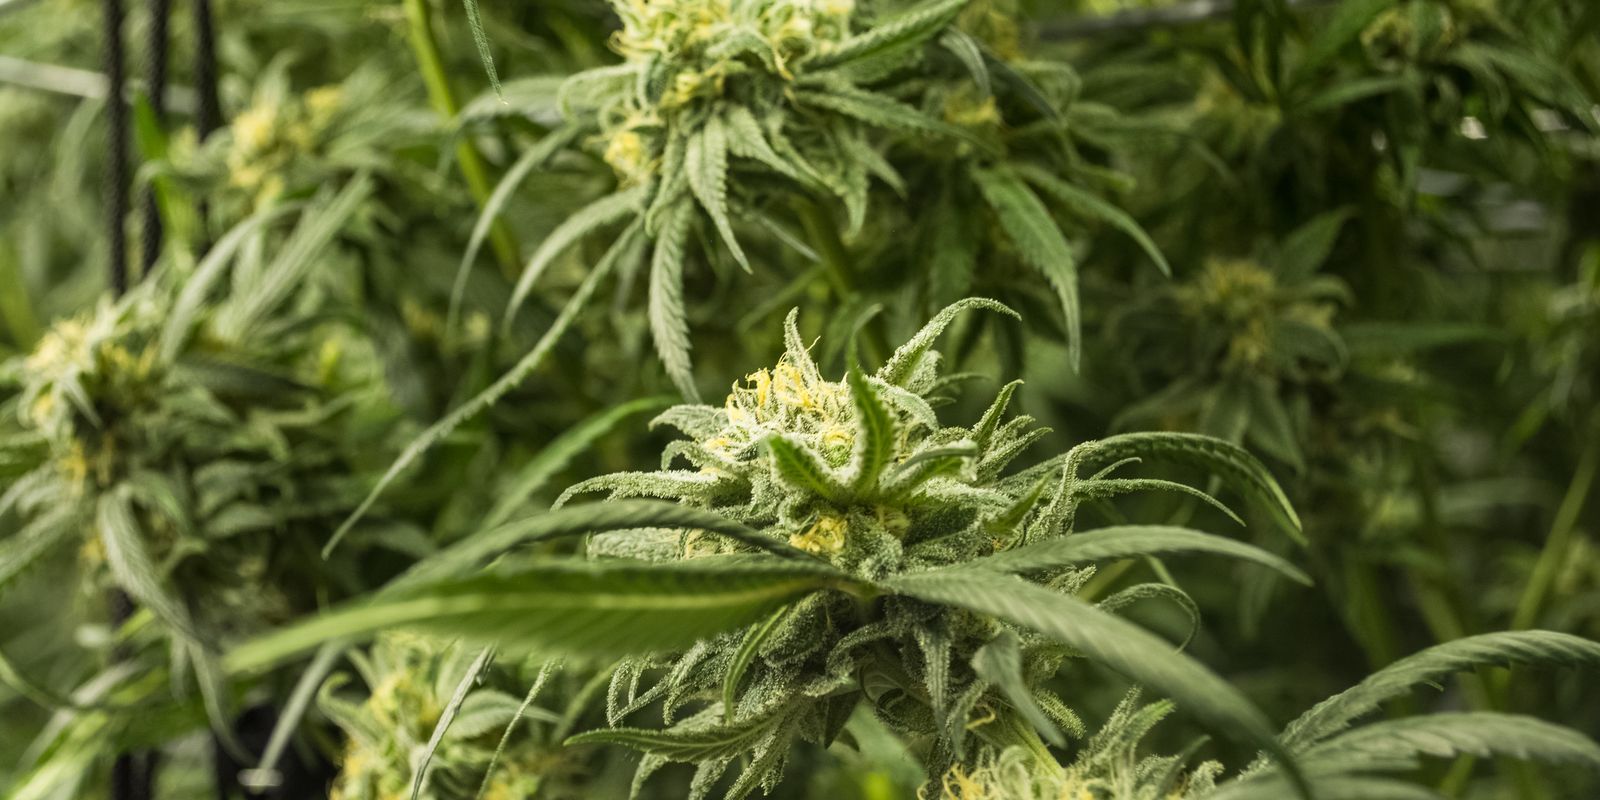 Jersey CPAs divided on legalizing marijuana